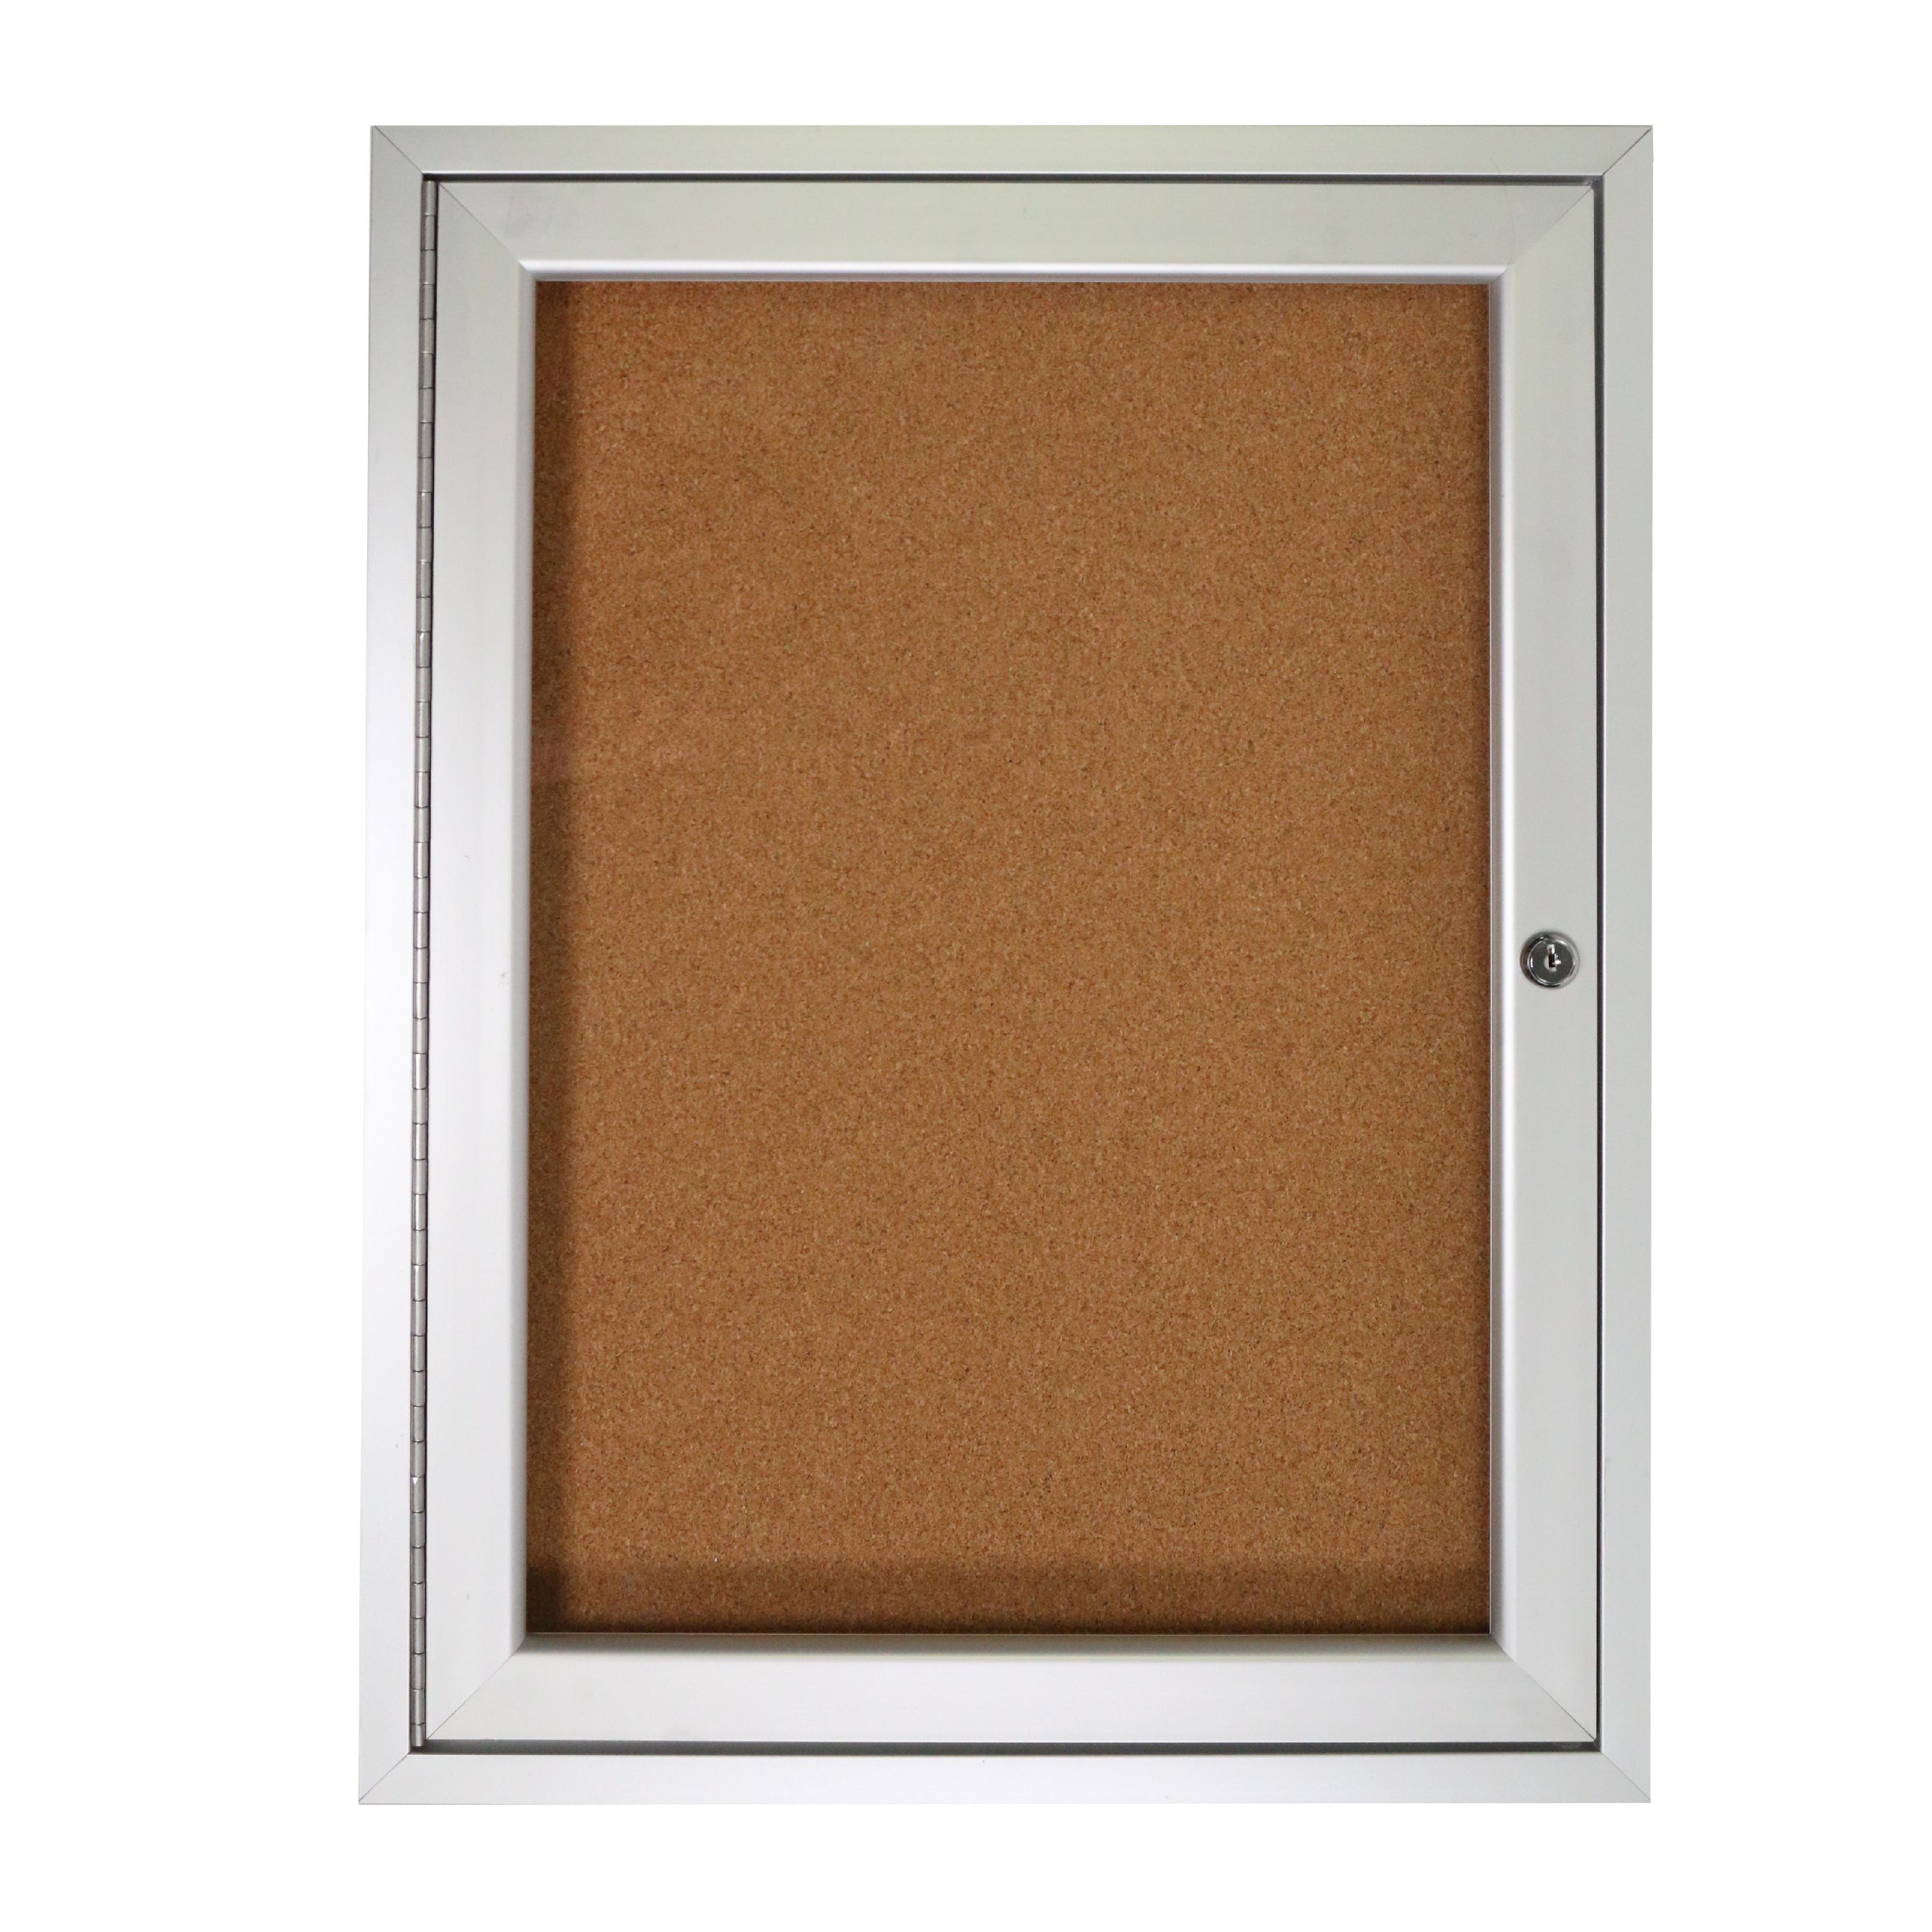 Pa13636k Ghent Enclosed Bulletin Board 1 Door Natural Cork Tackboard With Satin Frame Notice